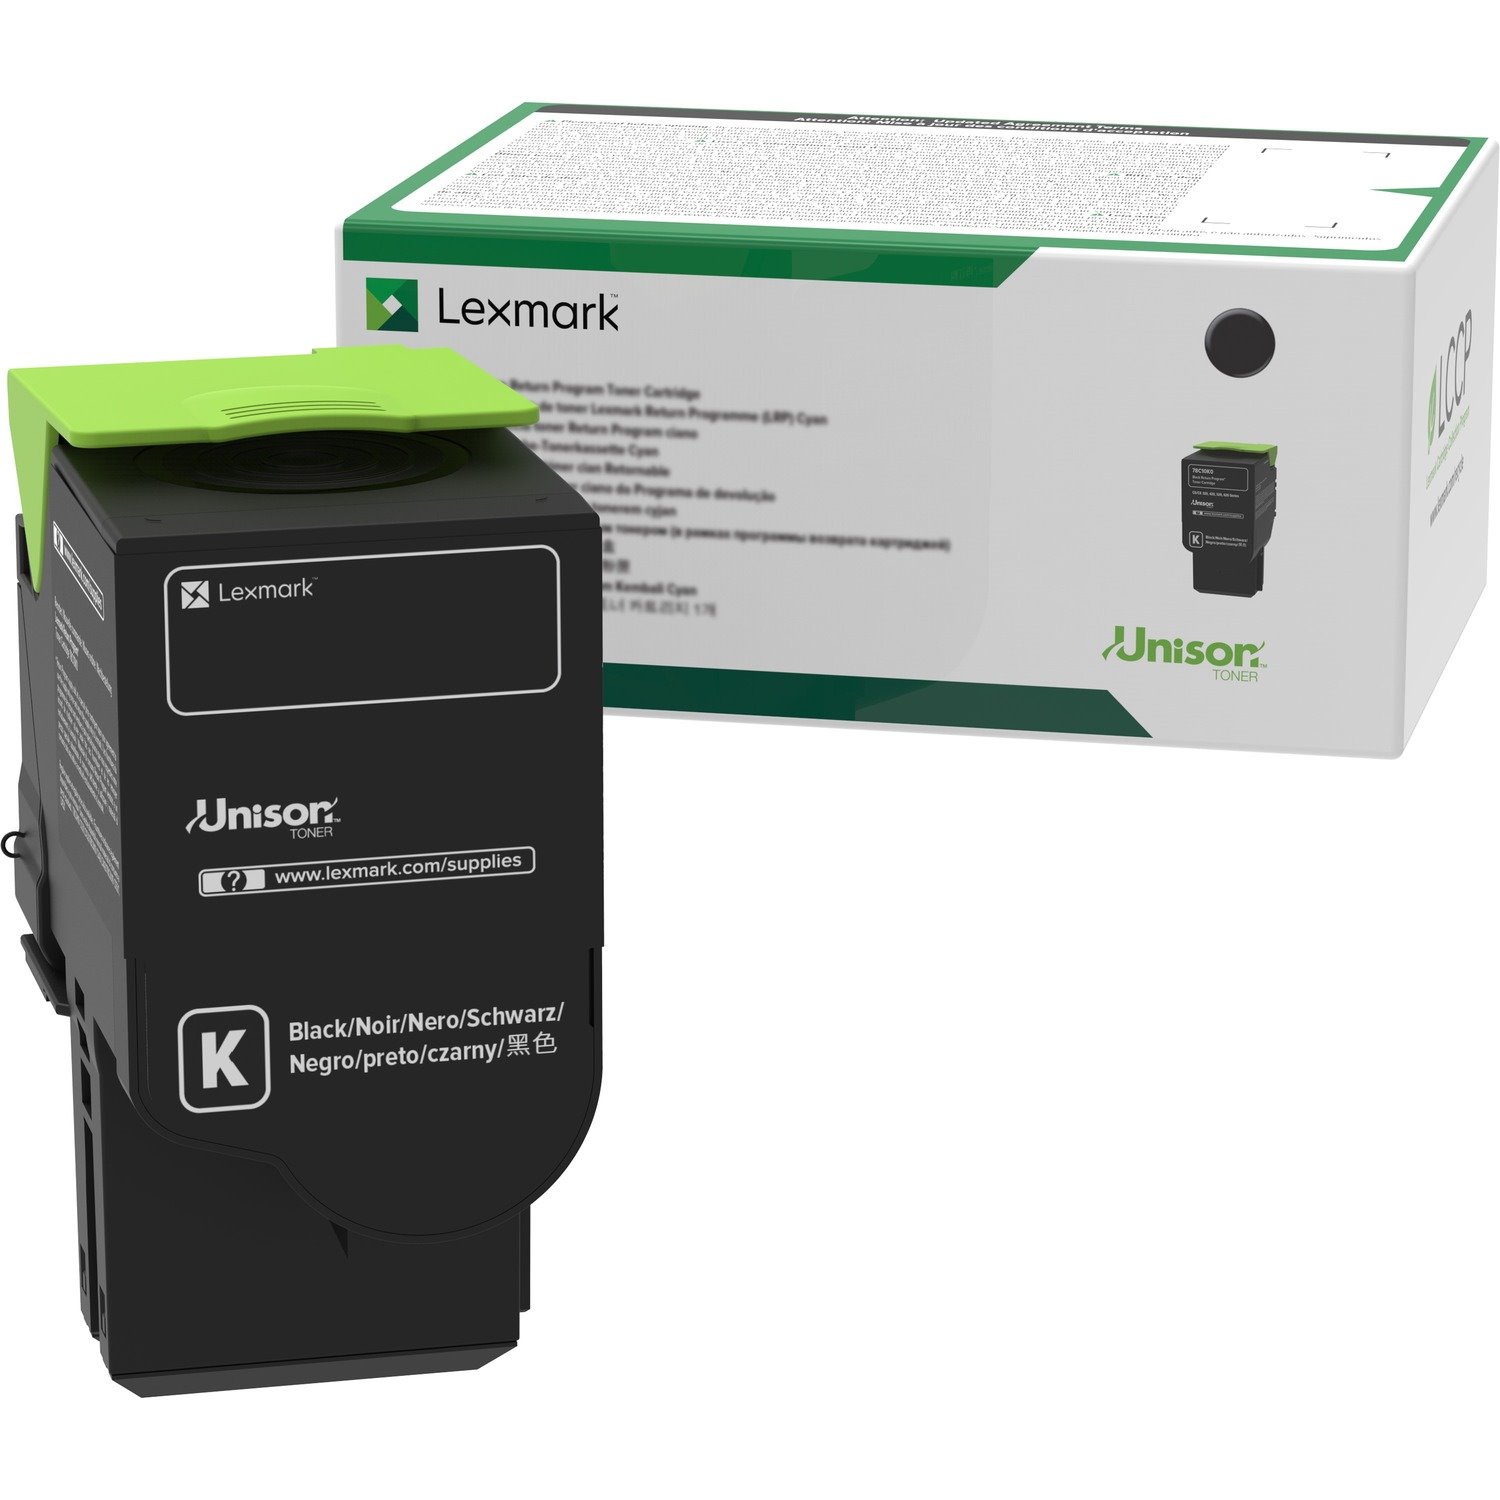 Lexmark Unison Original Ultra High Yield Laser Toner Cartridge - Black - 1 Each